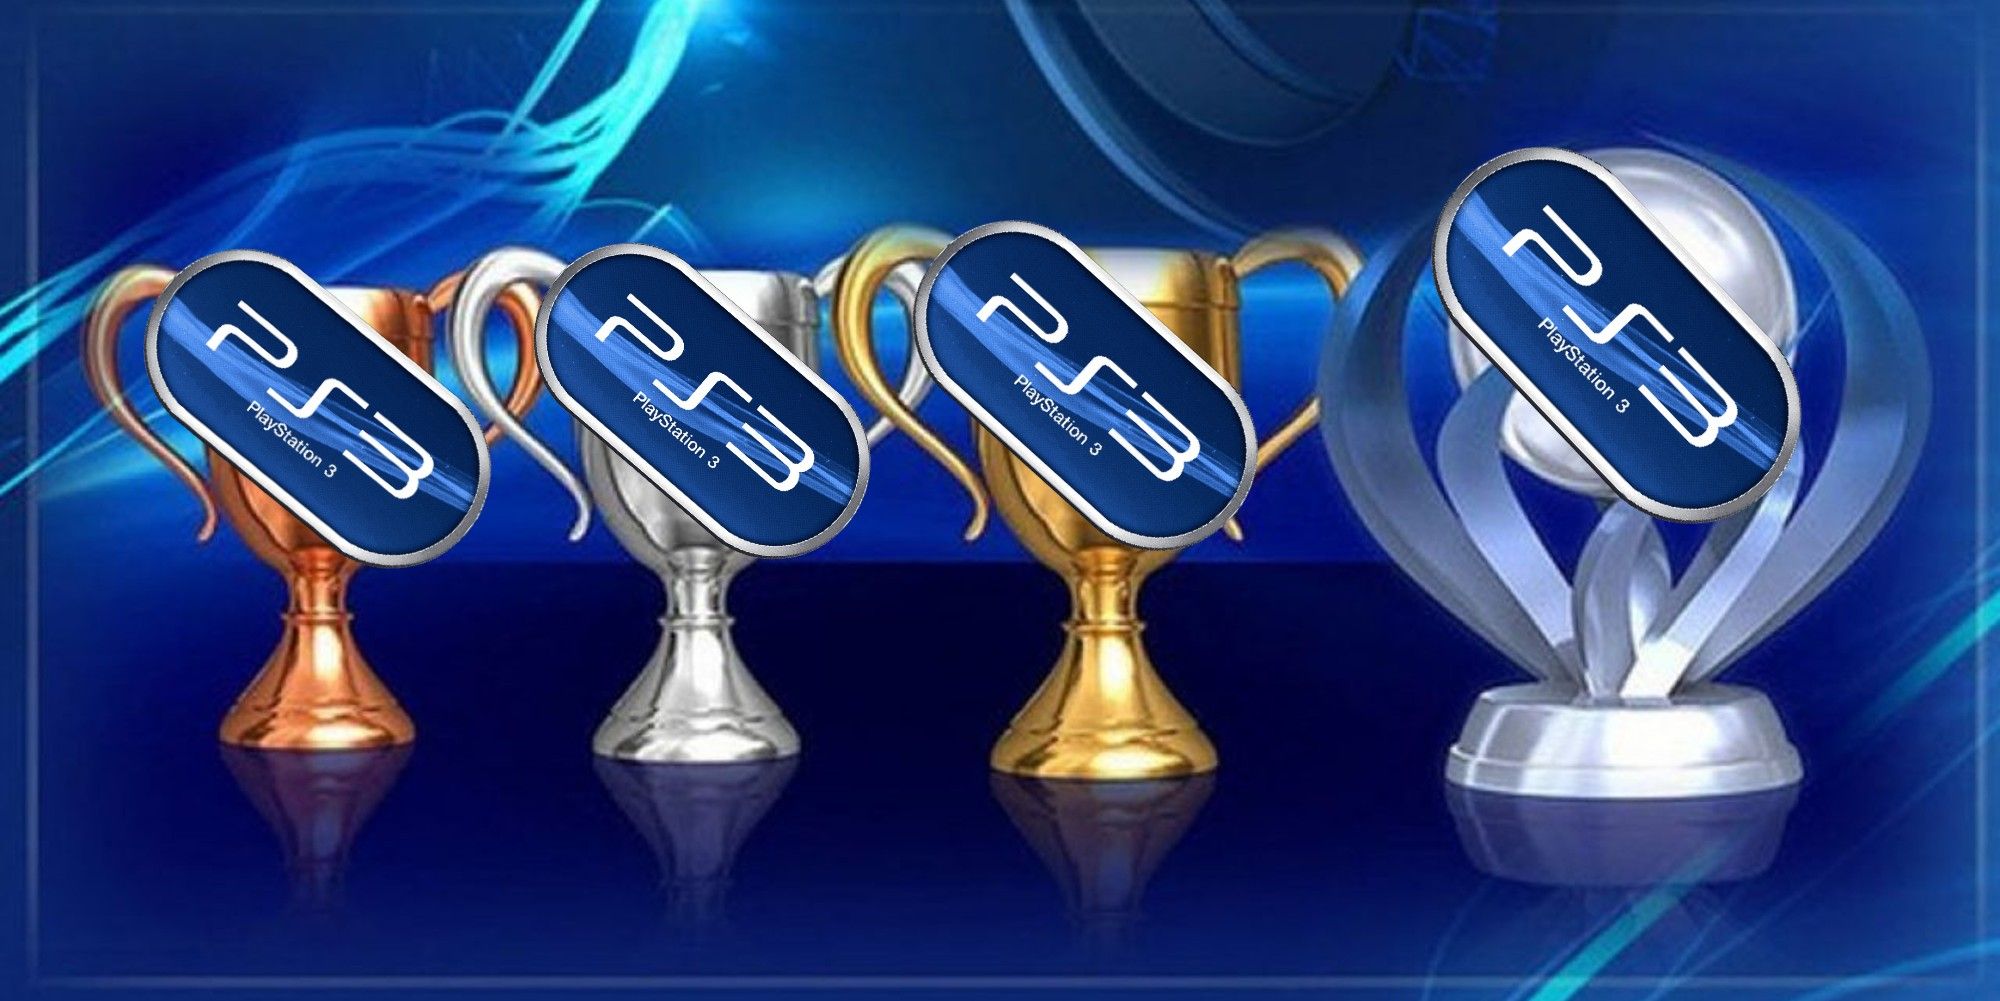 ps3 logos ps4 trophies